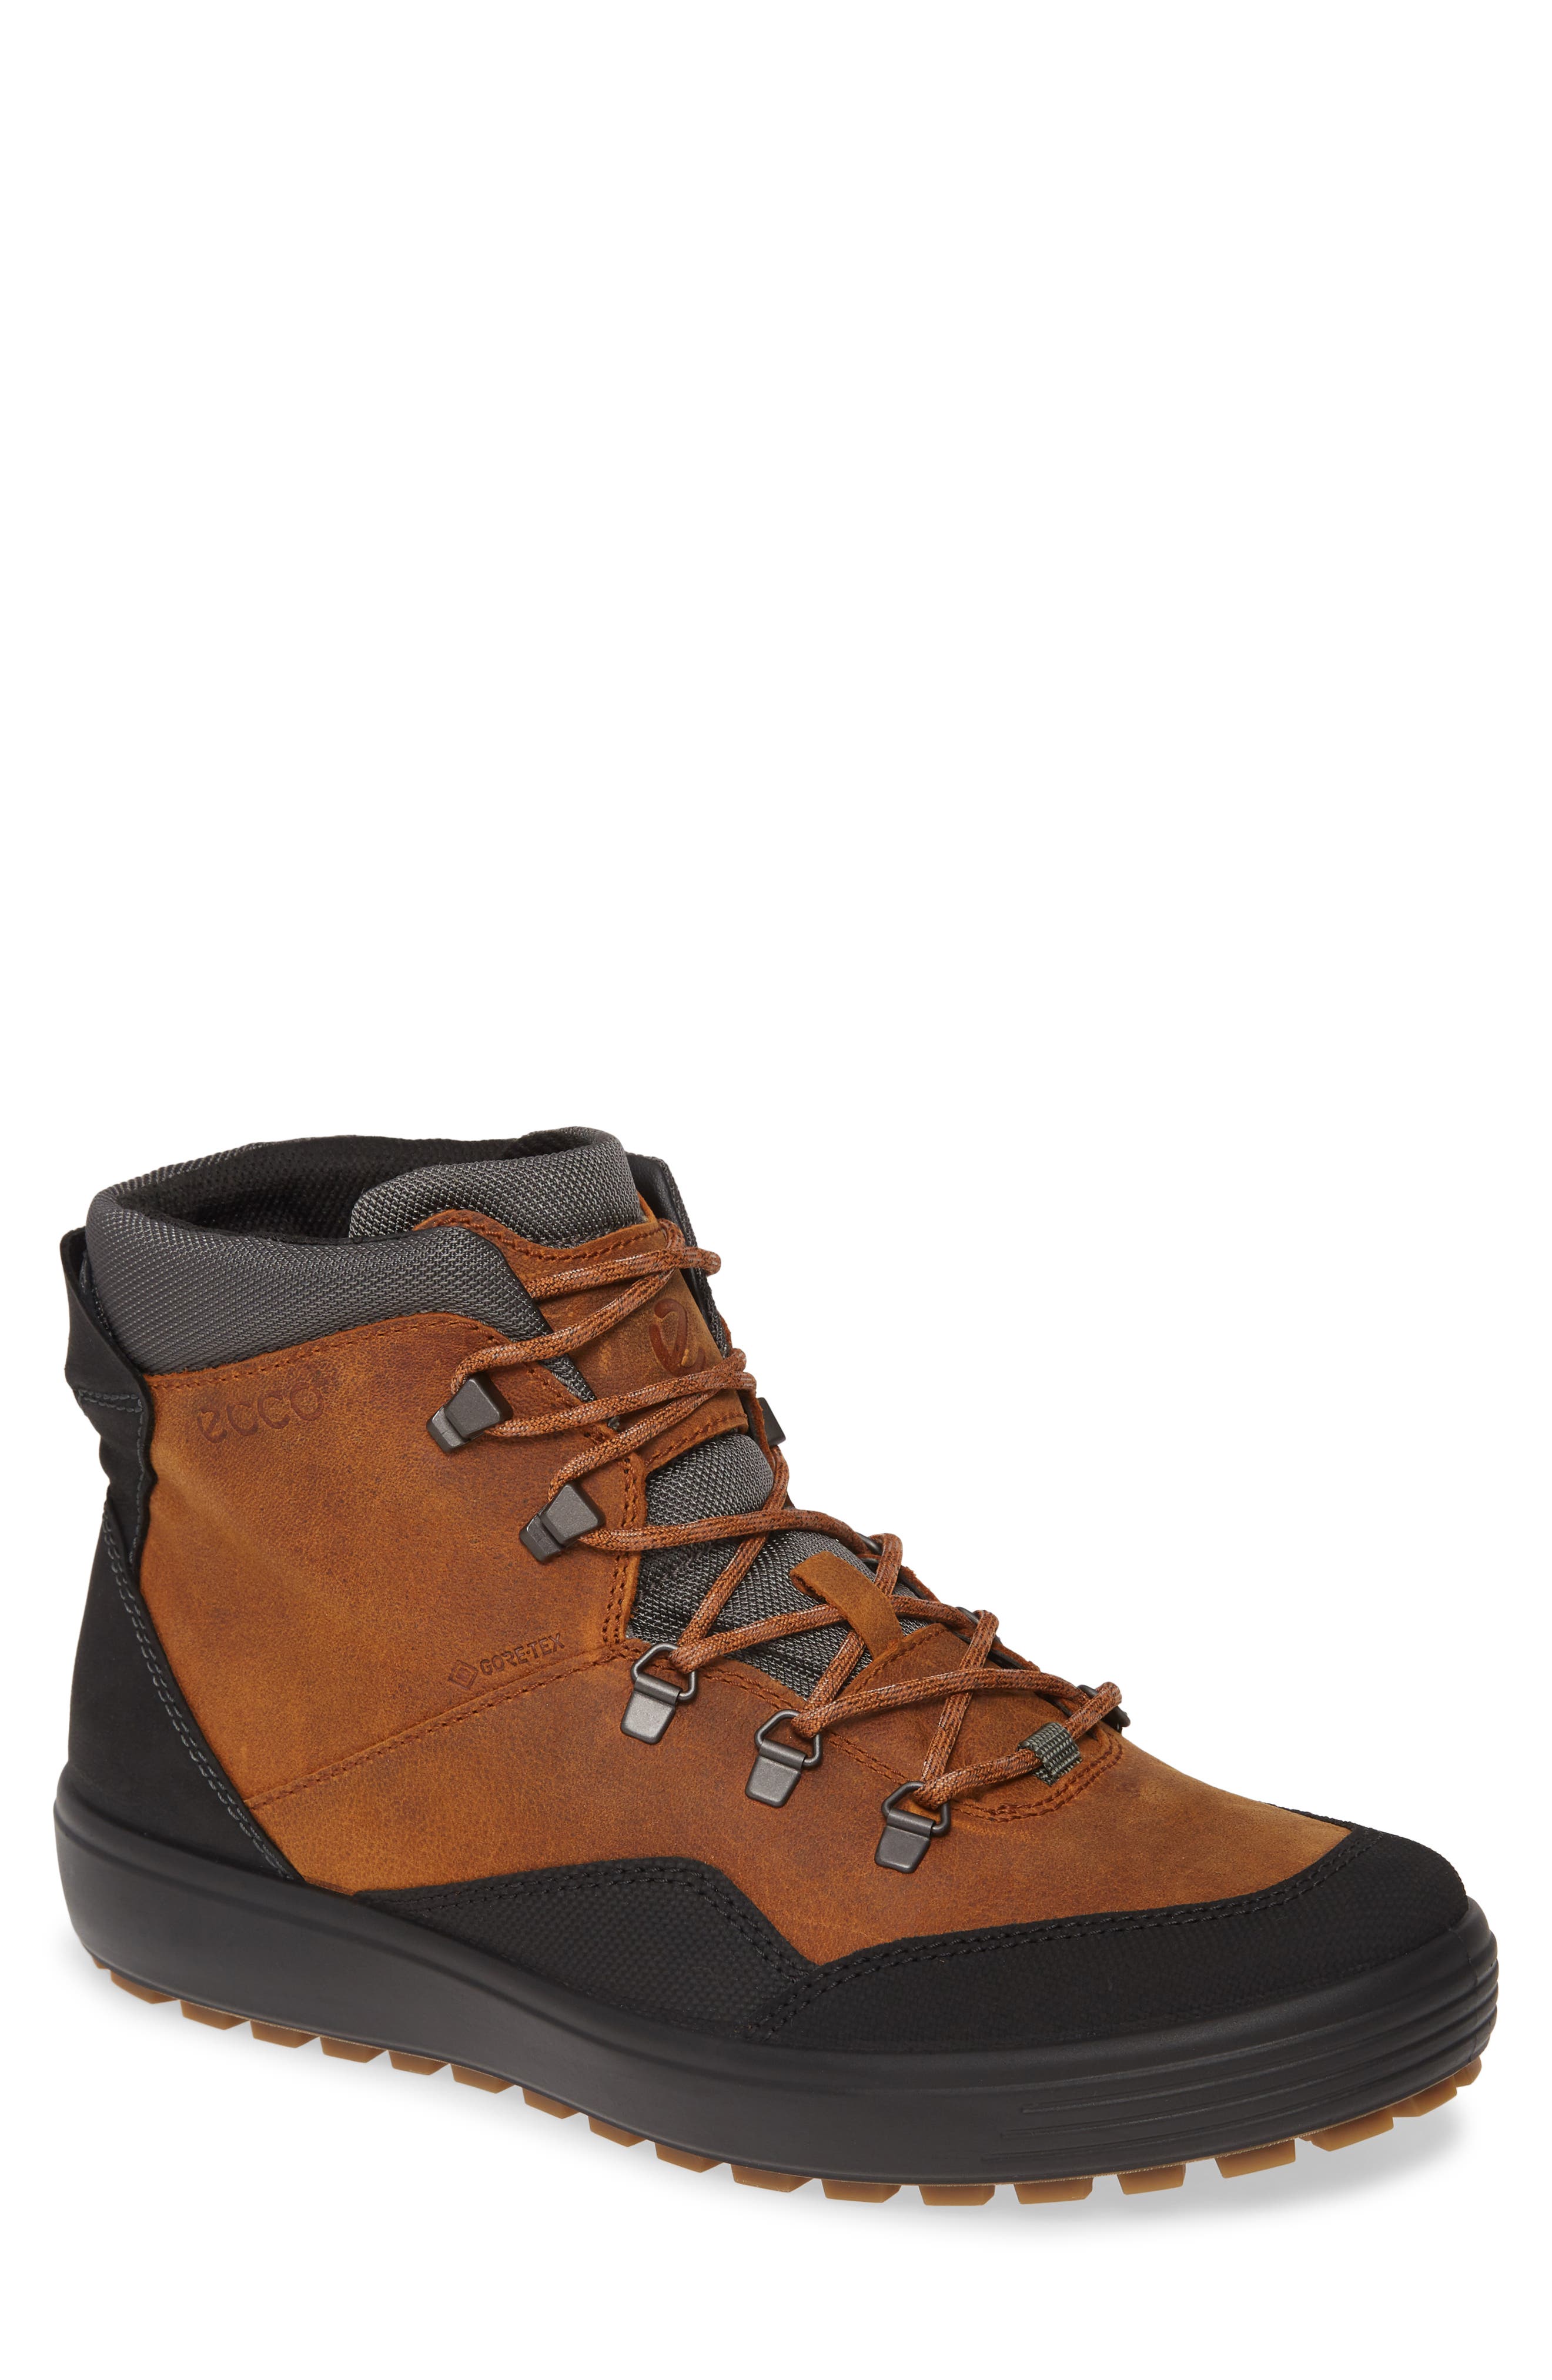 UPC 825840089950 product image for Men's Ecco Soft 7 Tred Terrain High Sneaker, Size 13-13.5US / 47EU - Brown | upcitemdb.com